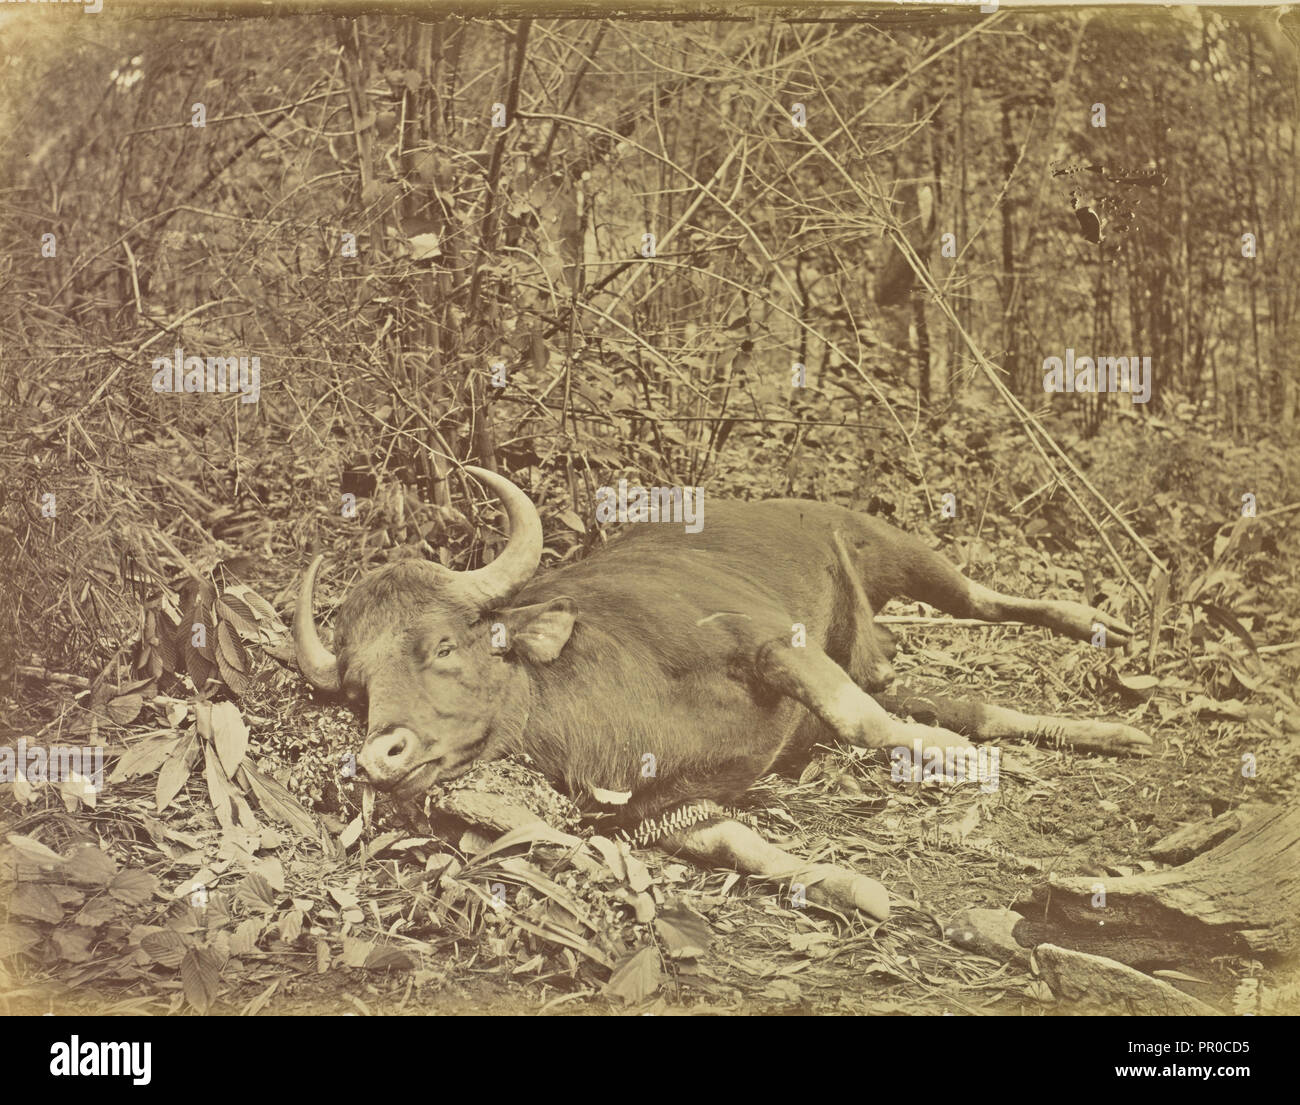 Dead Cow; Colonel William Willoughby Hooper, British, 1837 - 1912, India; about 1870; Albumen silver print Stock Photo